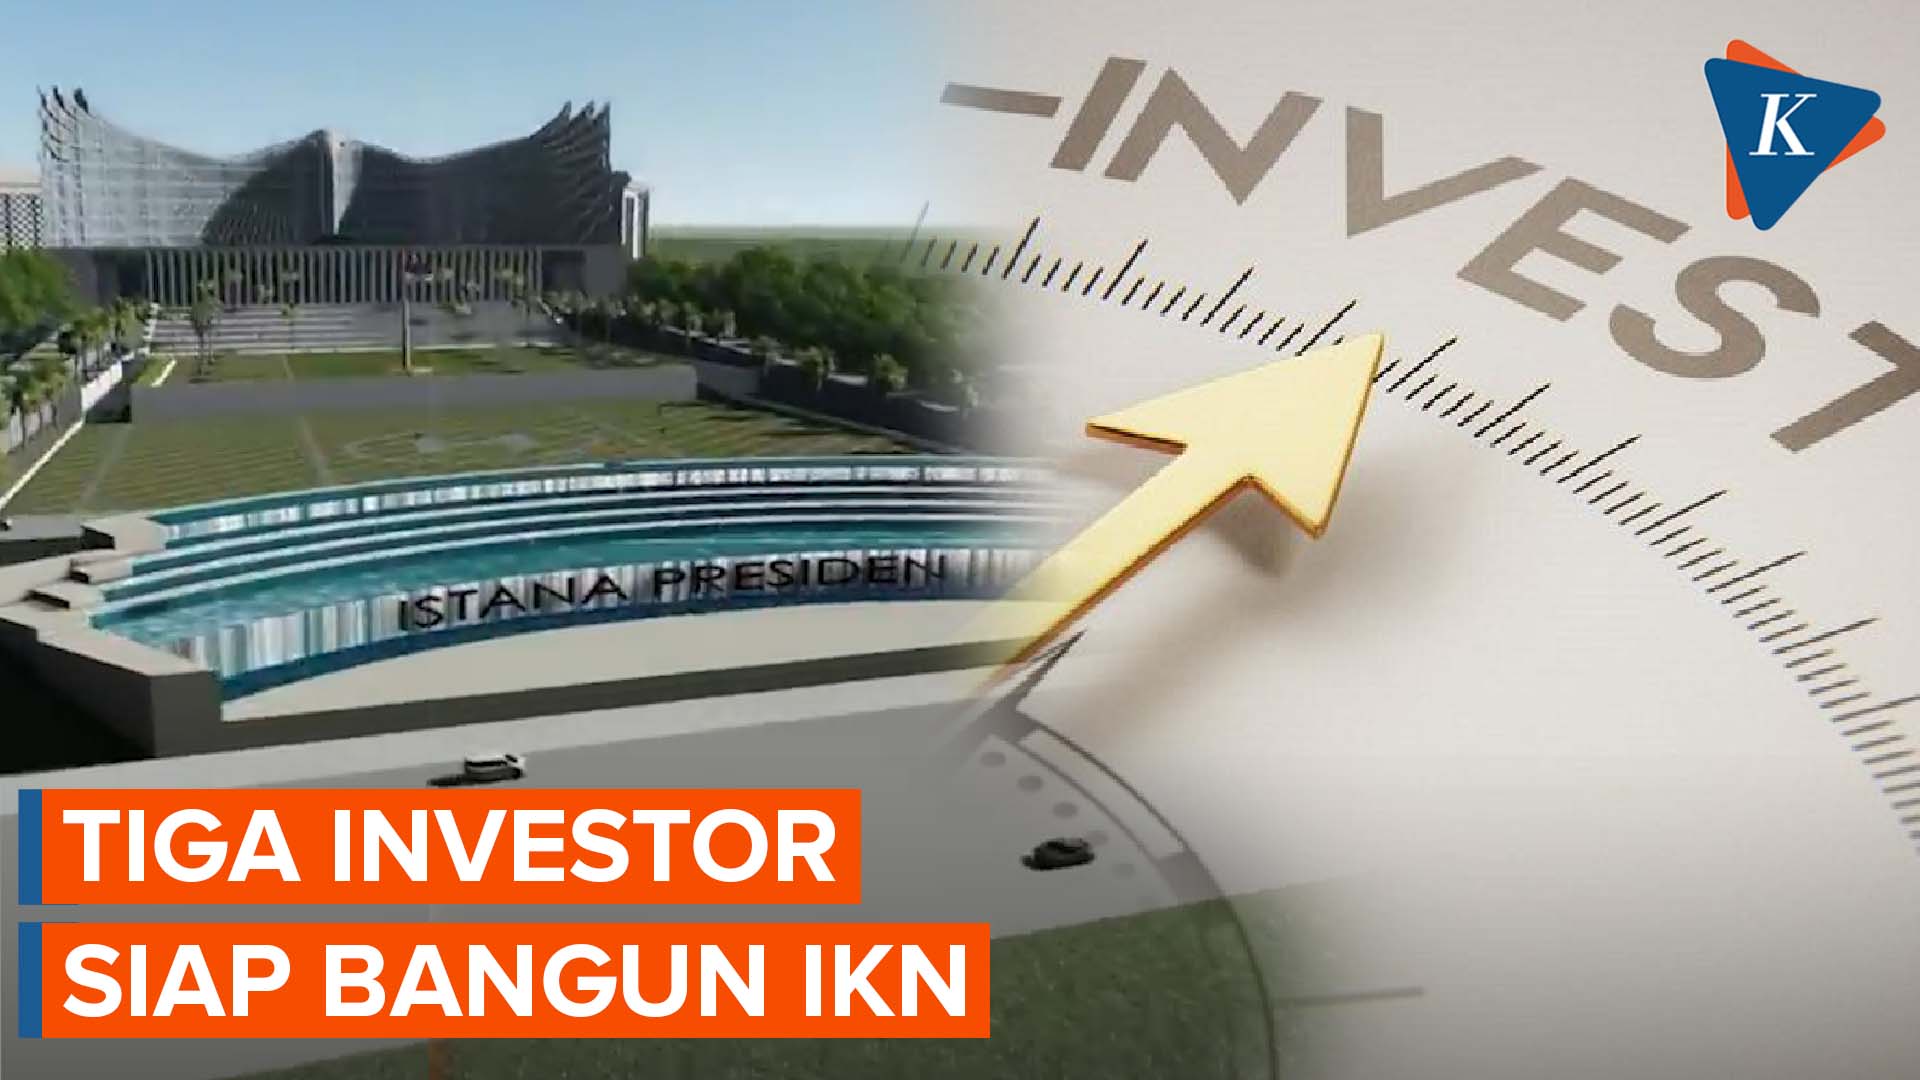 IKN Dapat Komitmen Investasi Rp 41 Triliun dari Tiga Investor